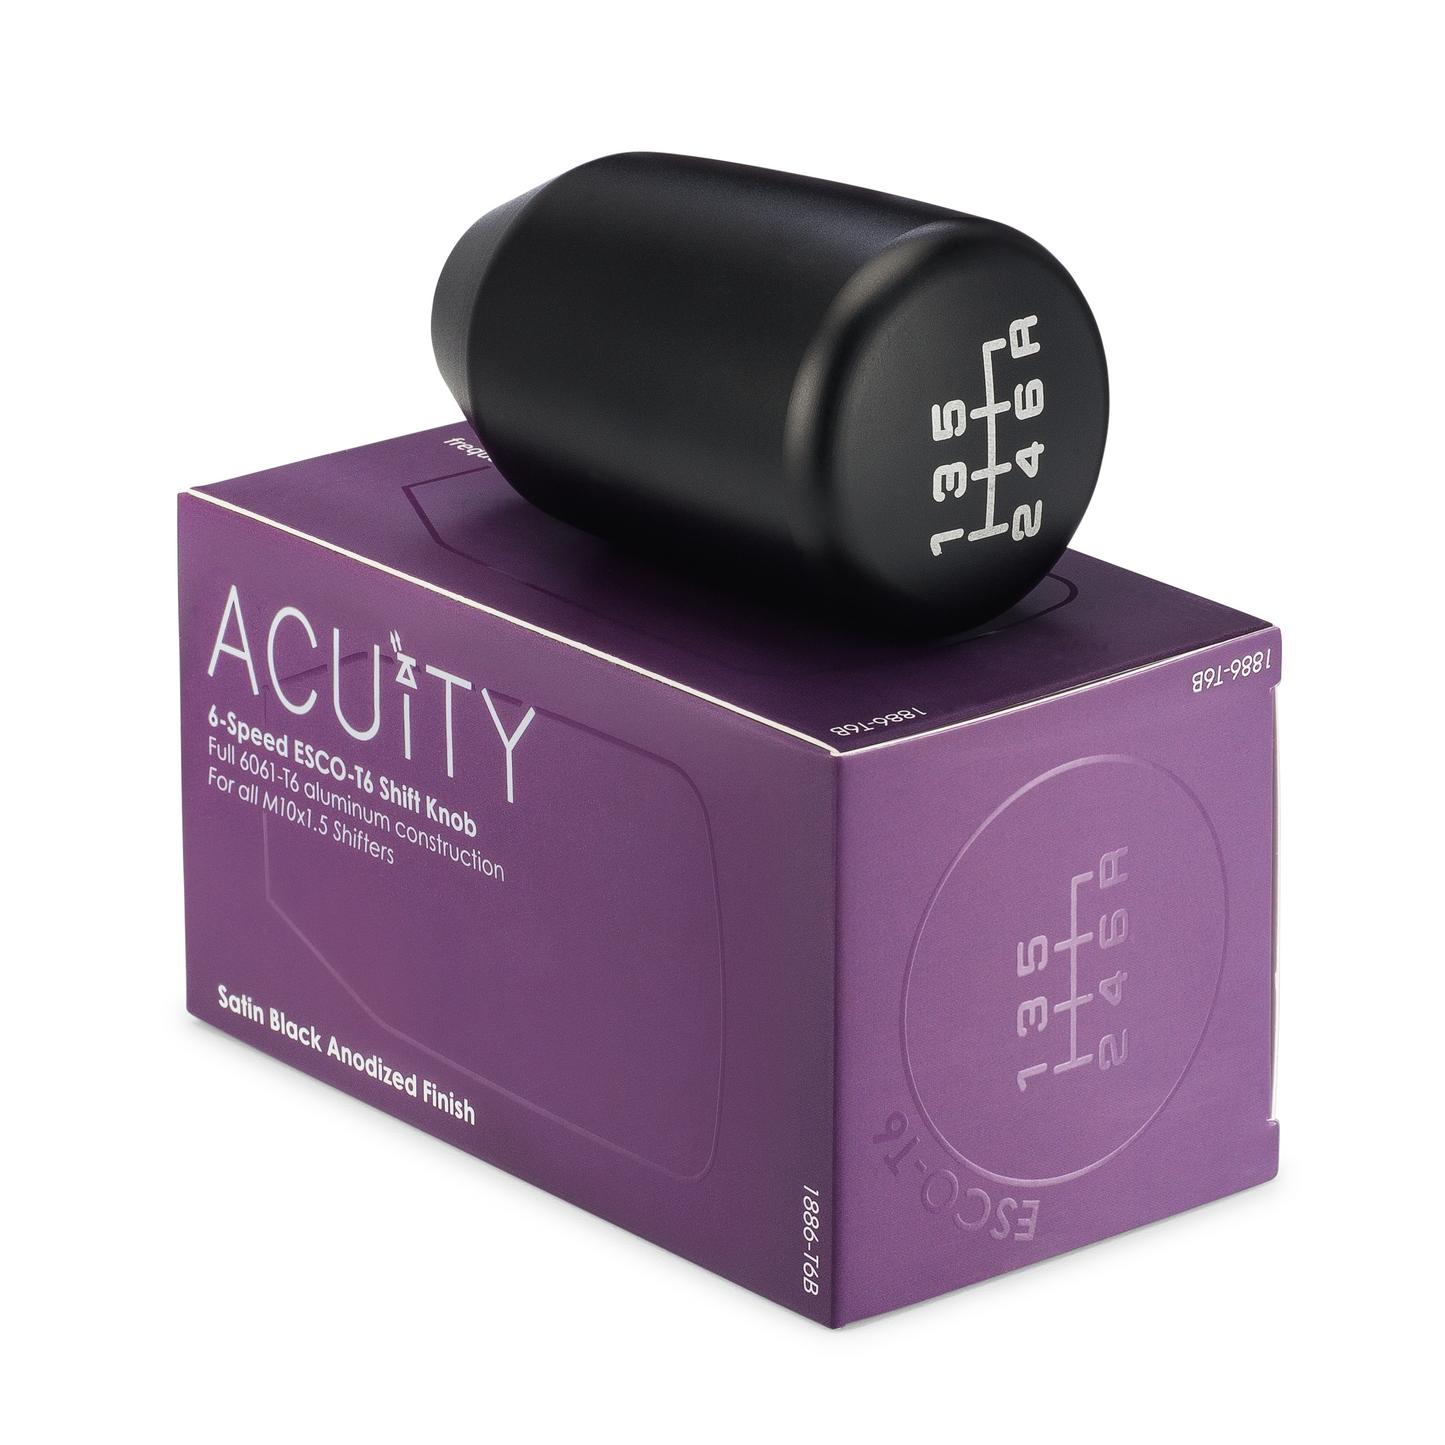 Acuity - ESCO-T6 Shift Knob in Satin Black Finish (M10X1.5)